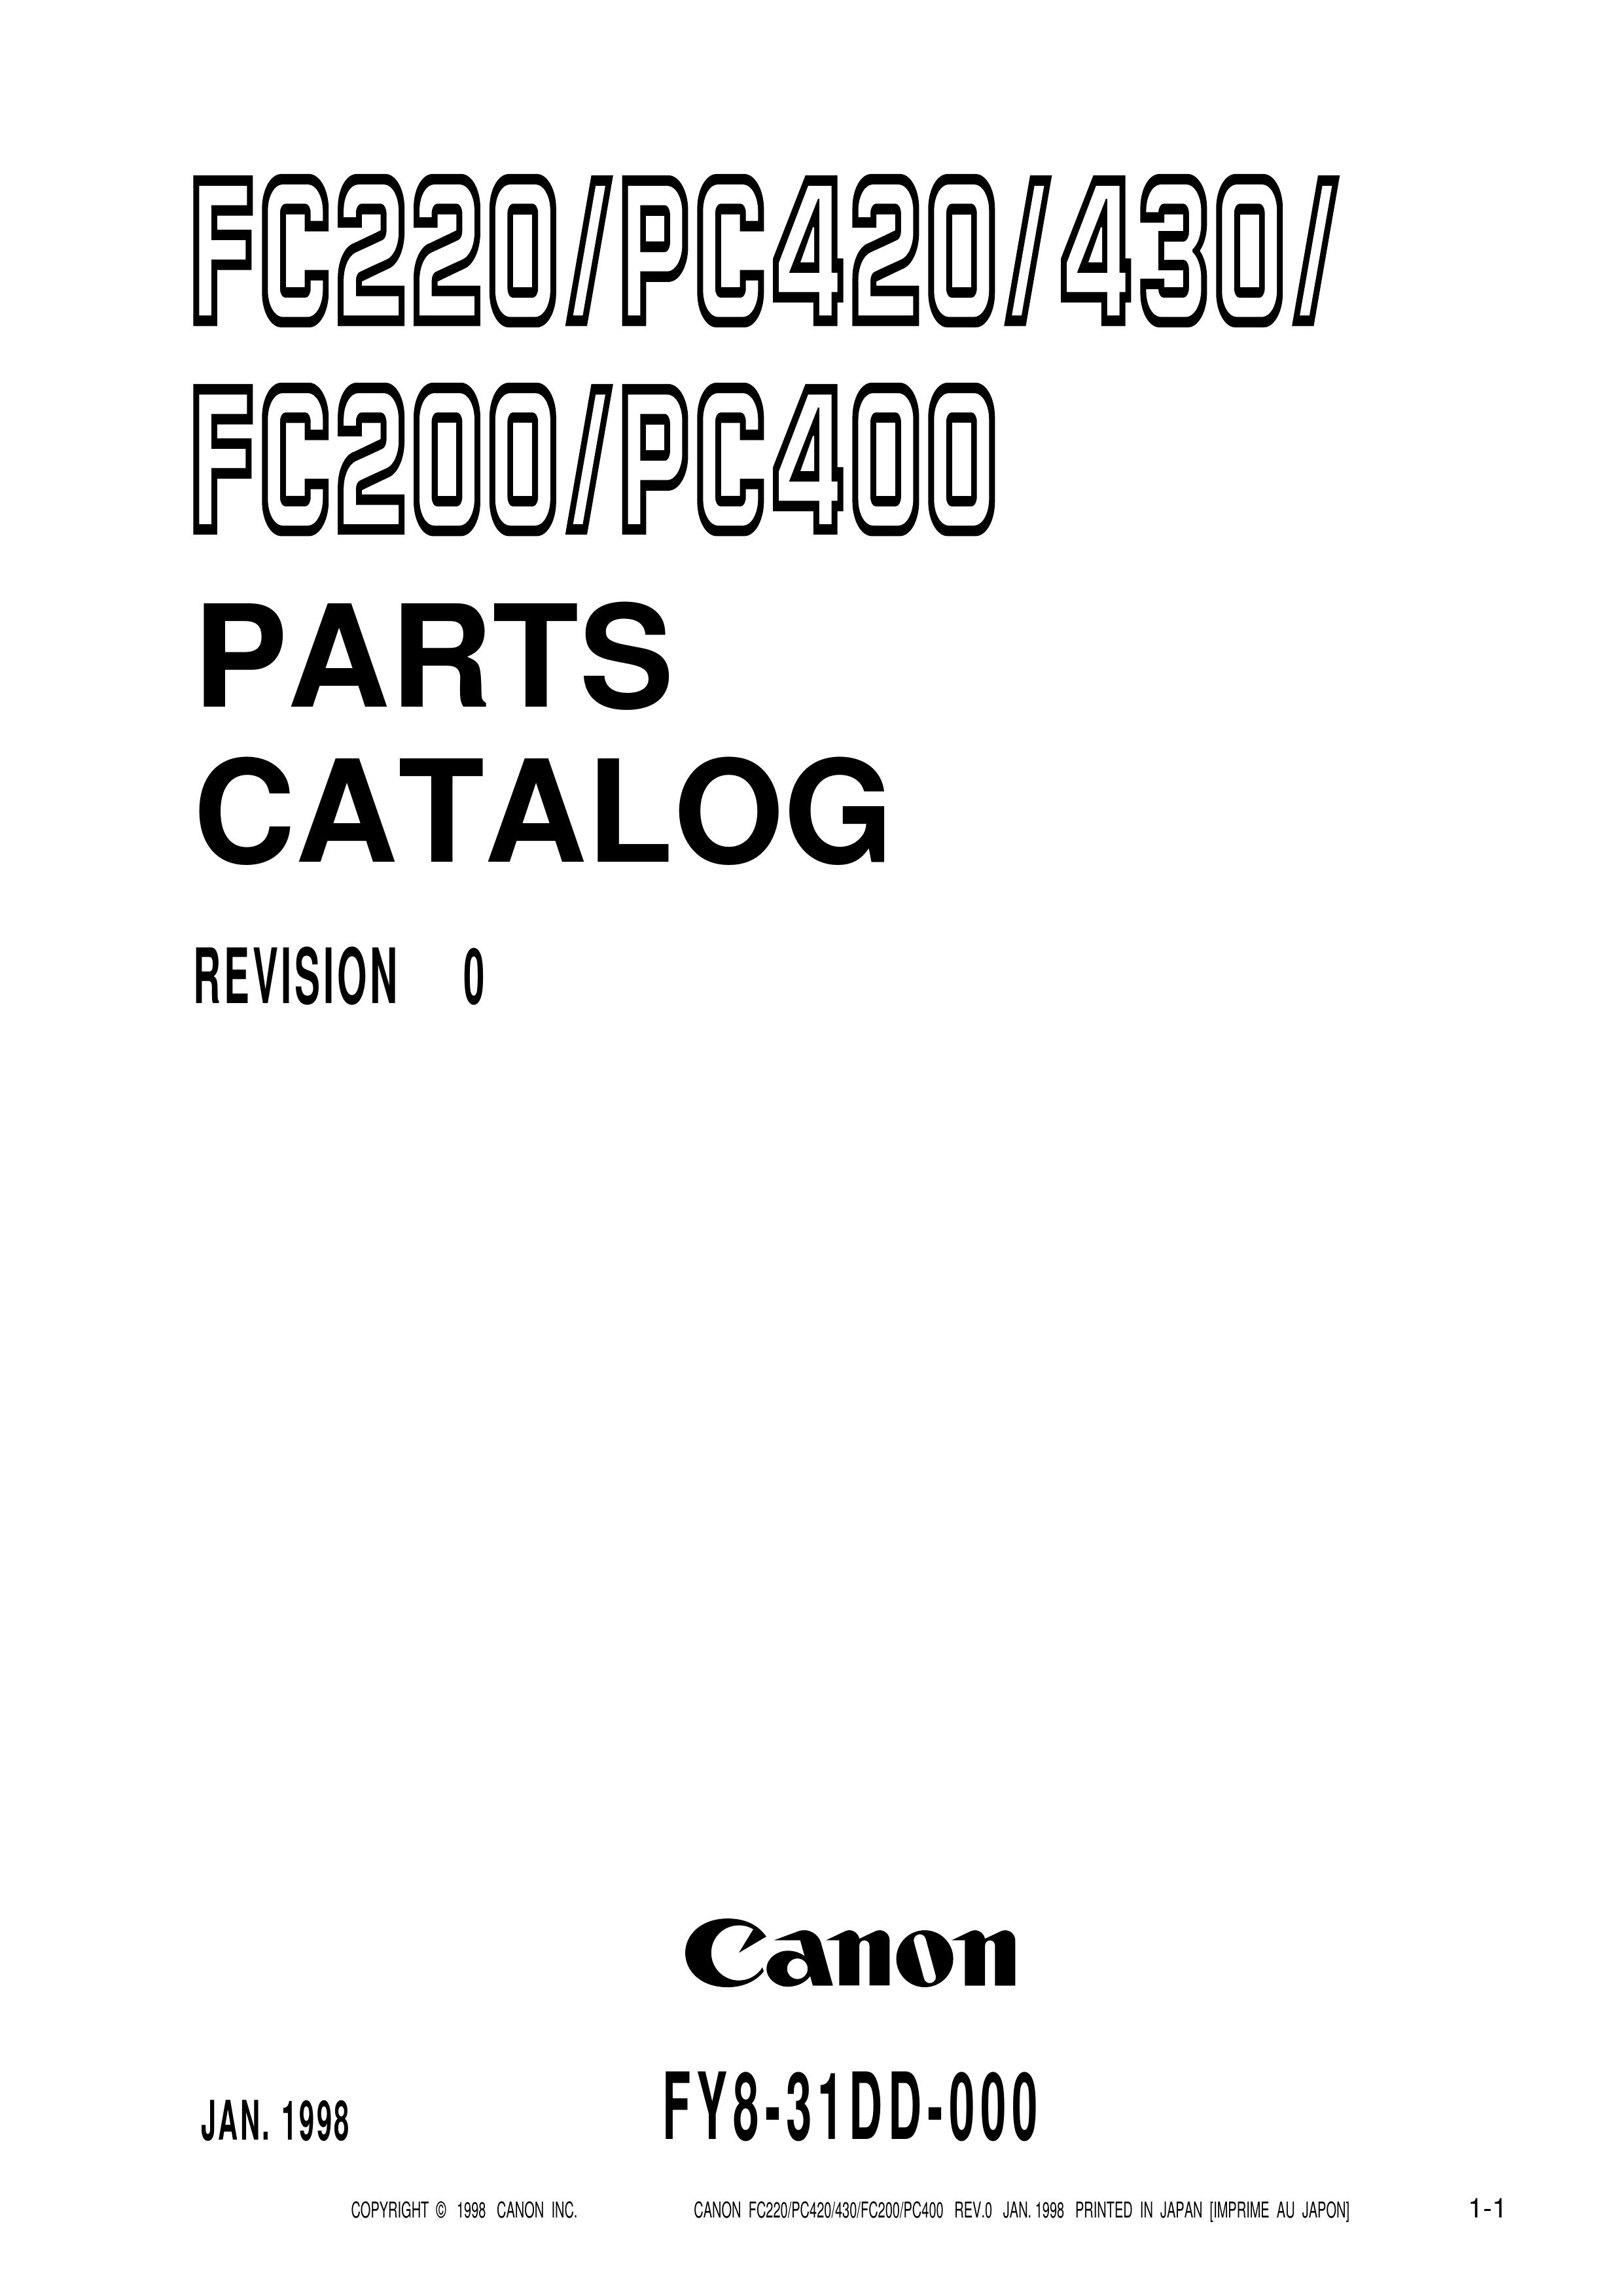 Canon FC220 Outboard Motor User Manual